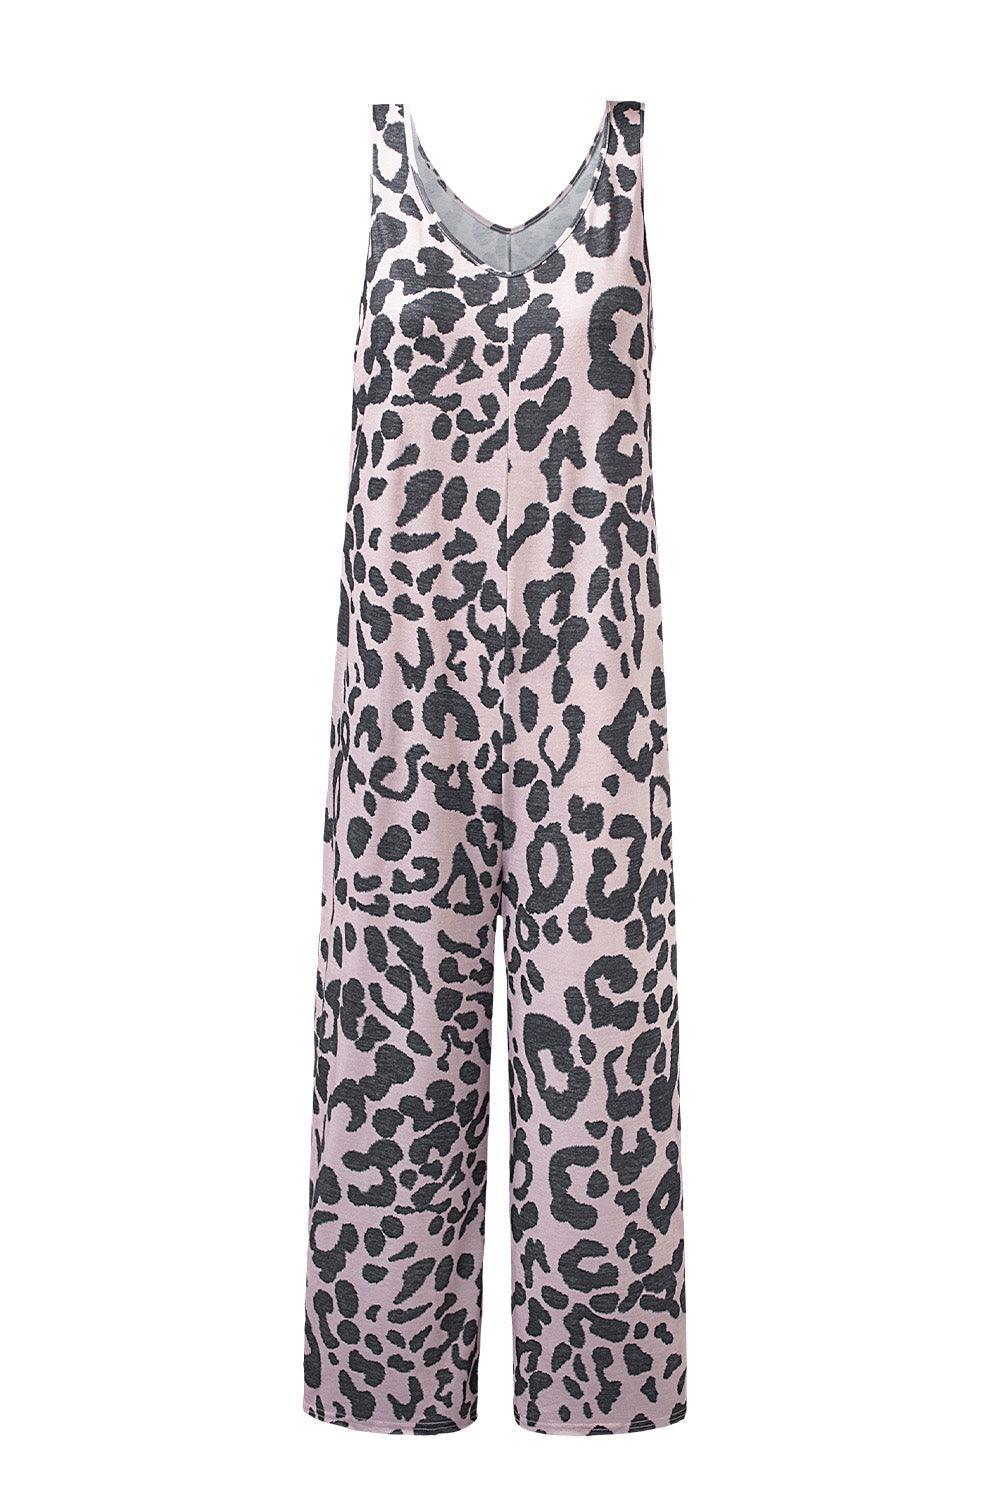 Leopard Print Pockets Sleeveless Wide Leg Jumpsuit - Ninonine